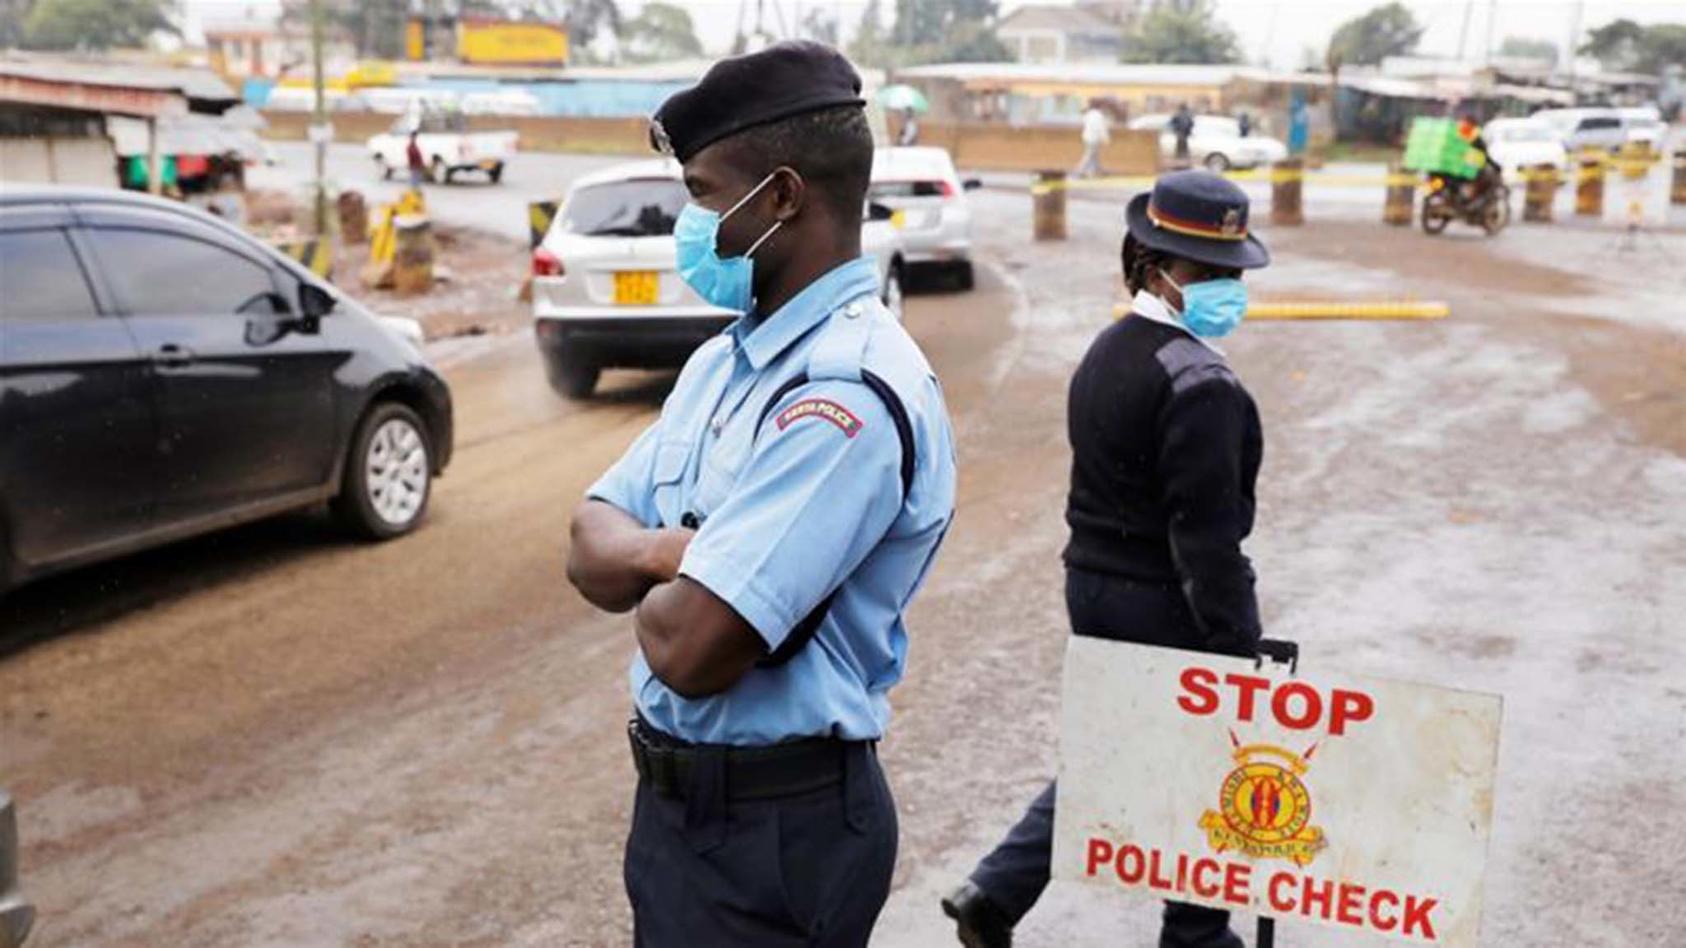 Police in Kenya enforce COVID lockdown measures, April 9, 2020. (CC License 4.0/Fiktube)